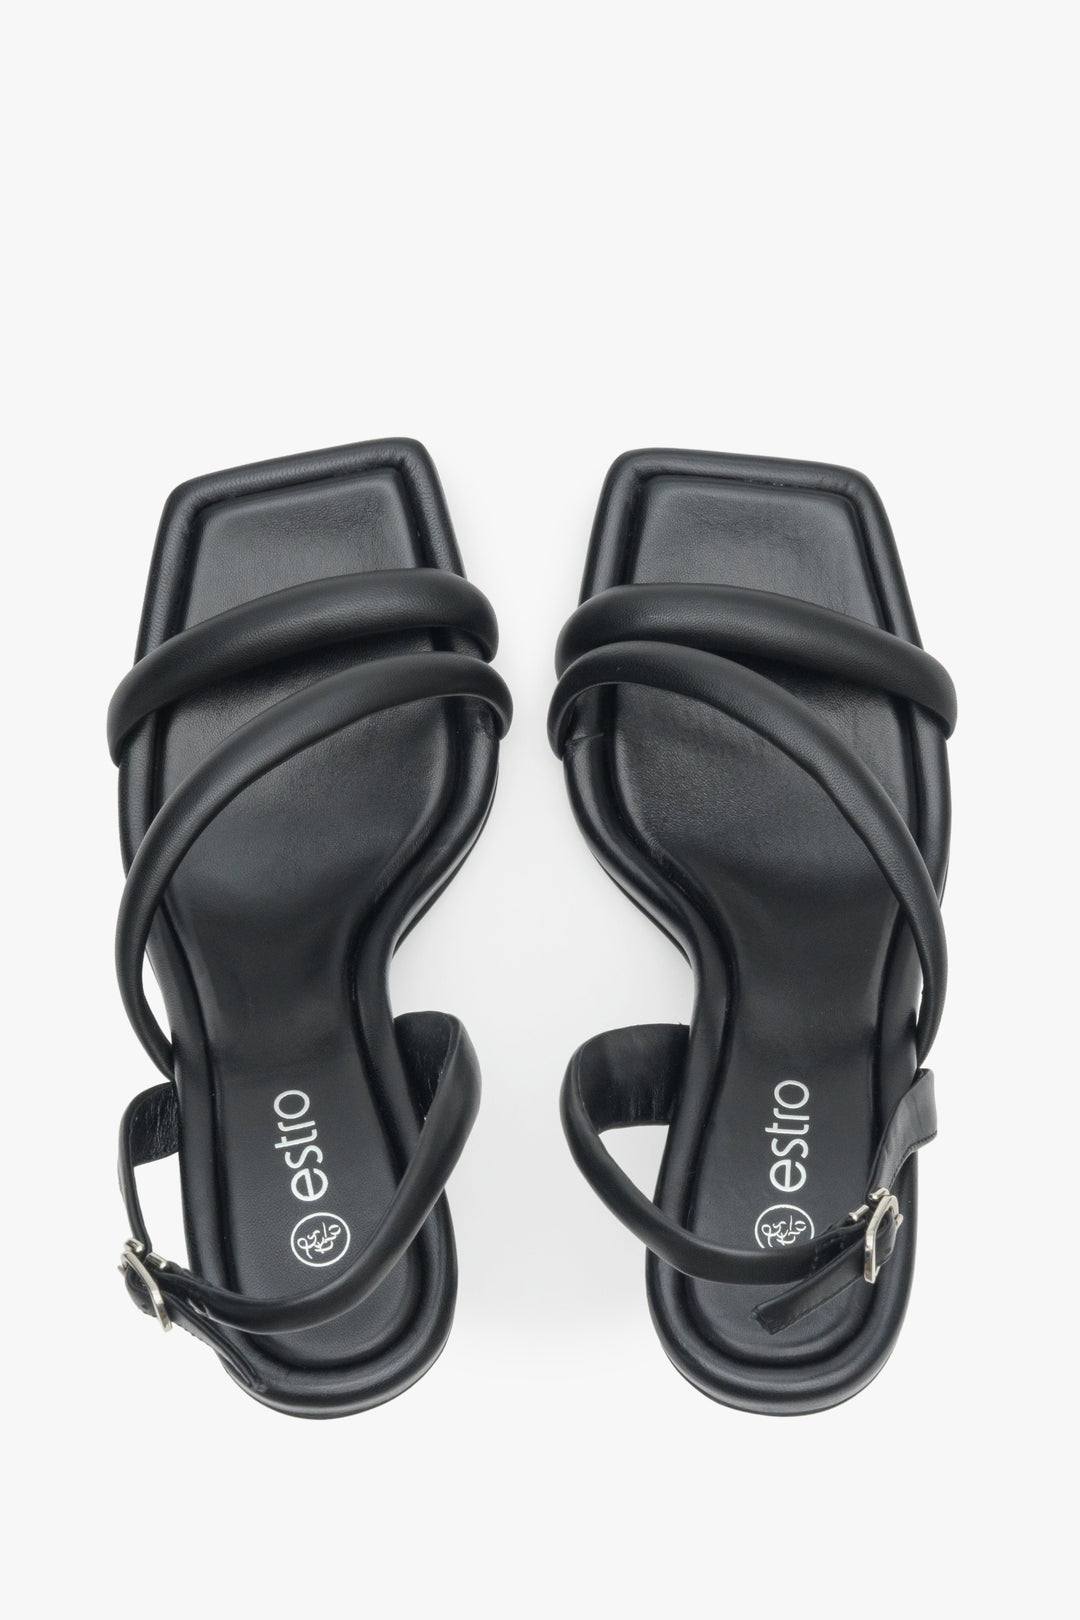 Women's soft-strap heeled sandals in black, Estro brand - presentation from above.